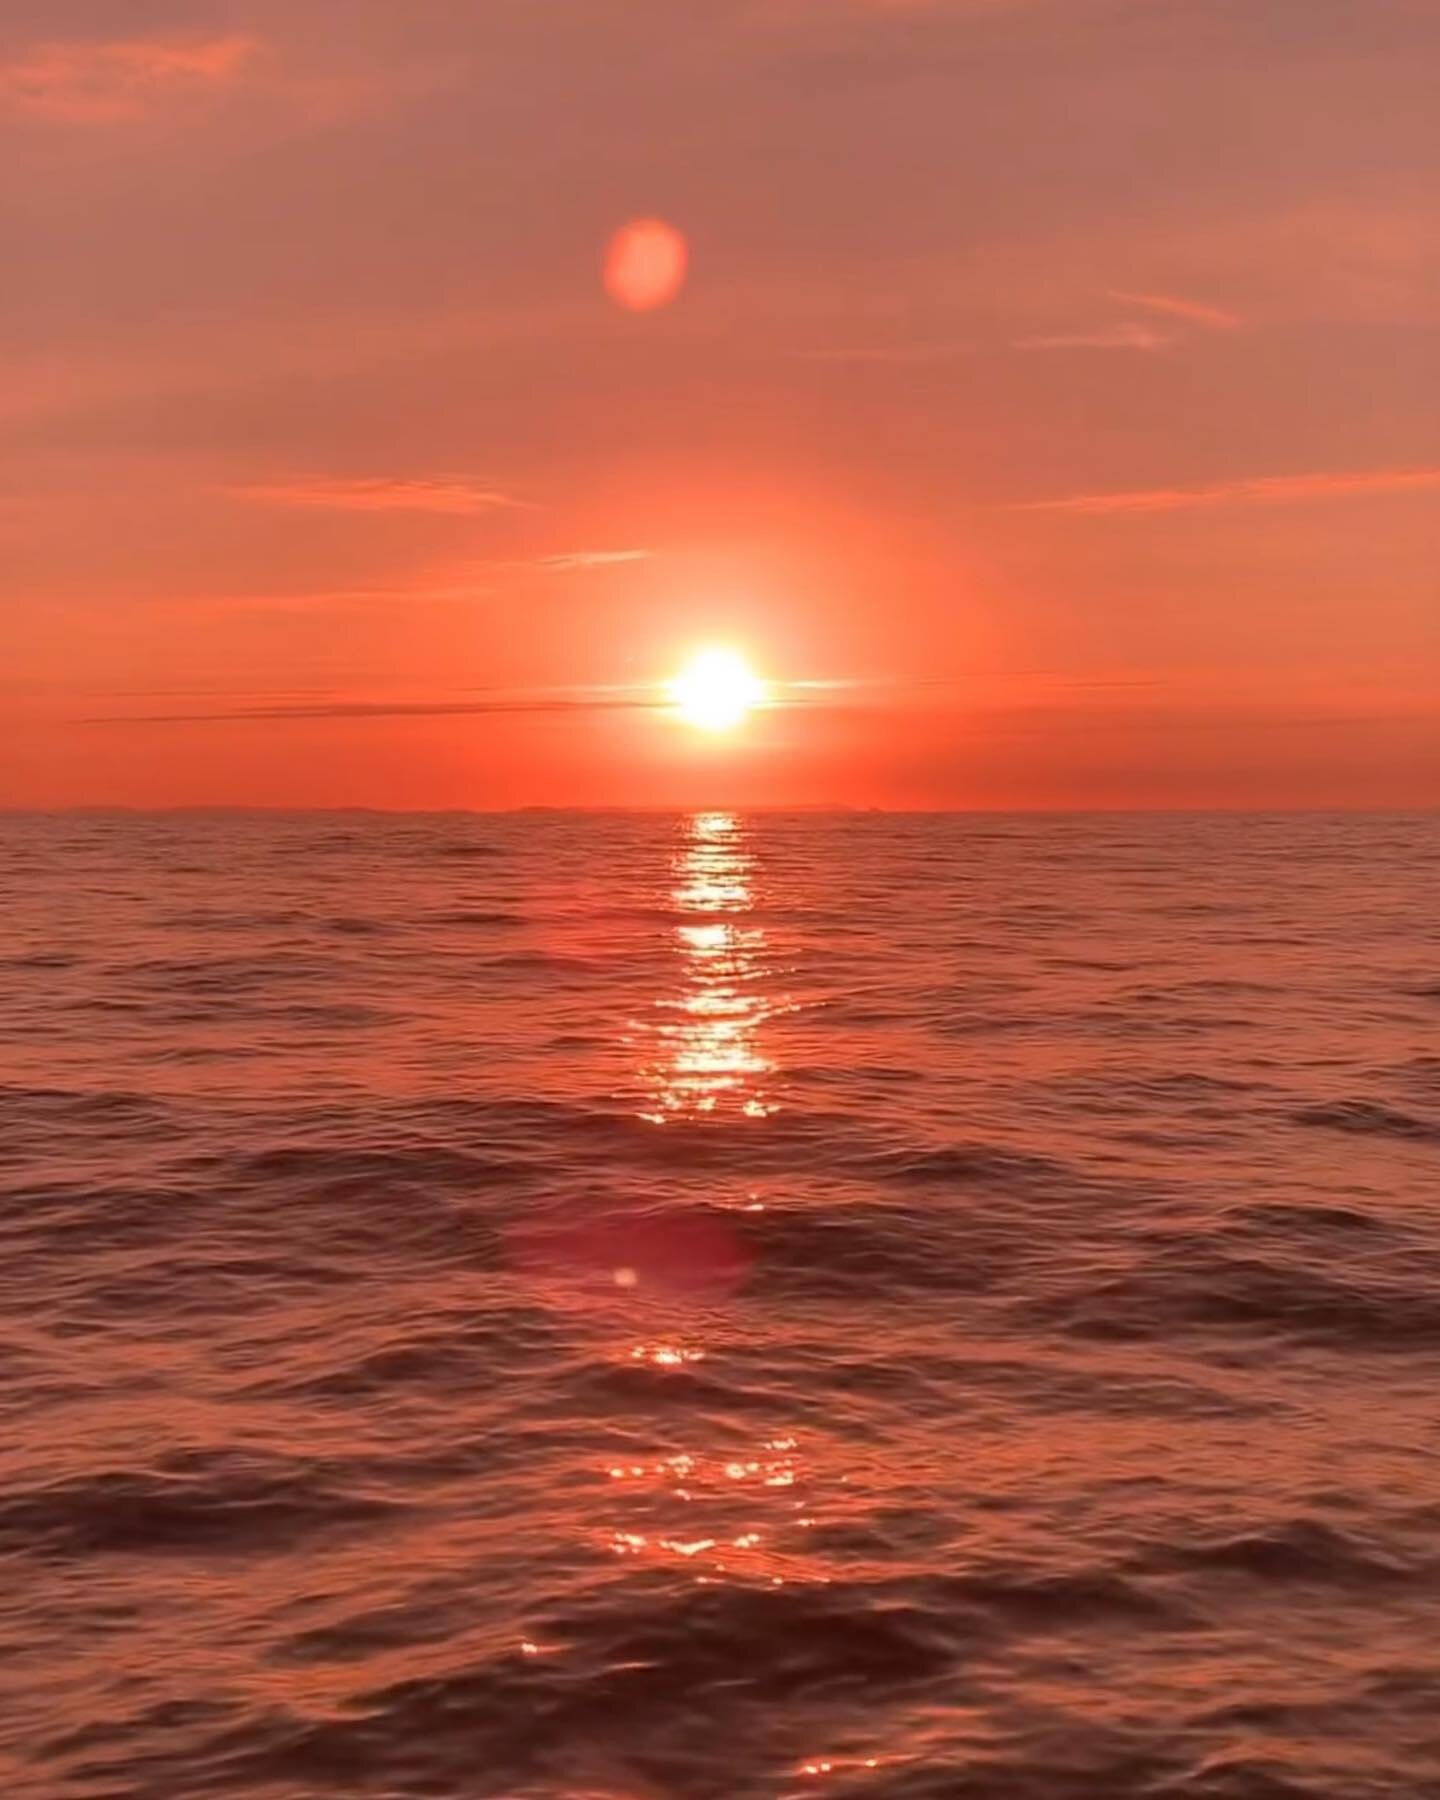 live in the sunshine, swim in the sea, drink the wild air 🙌☀️🙌

Words - Ralph Waldo Emerson
Image - @james_aiken

#chariotsofthesun #sunset #sunrise #sunworship #morningoftheearth